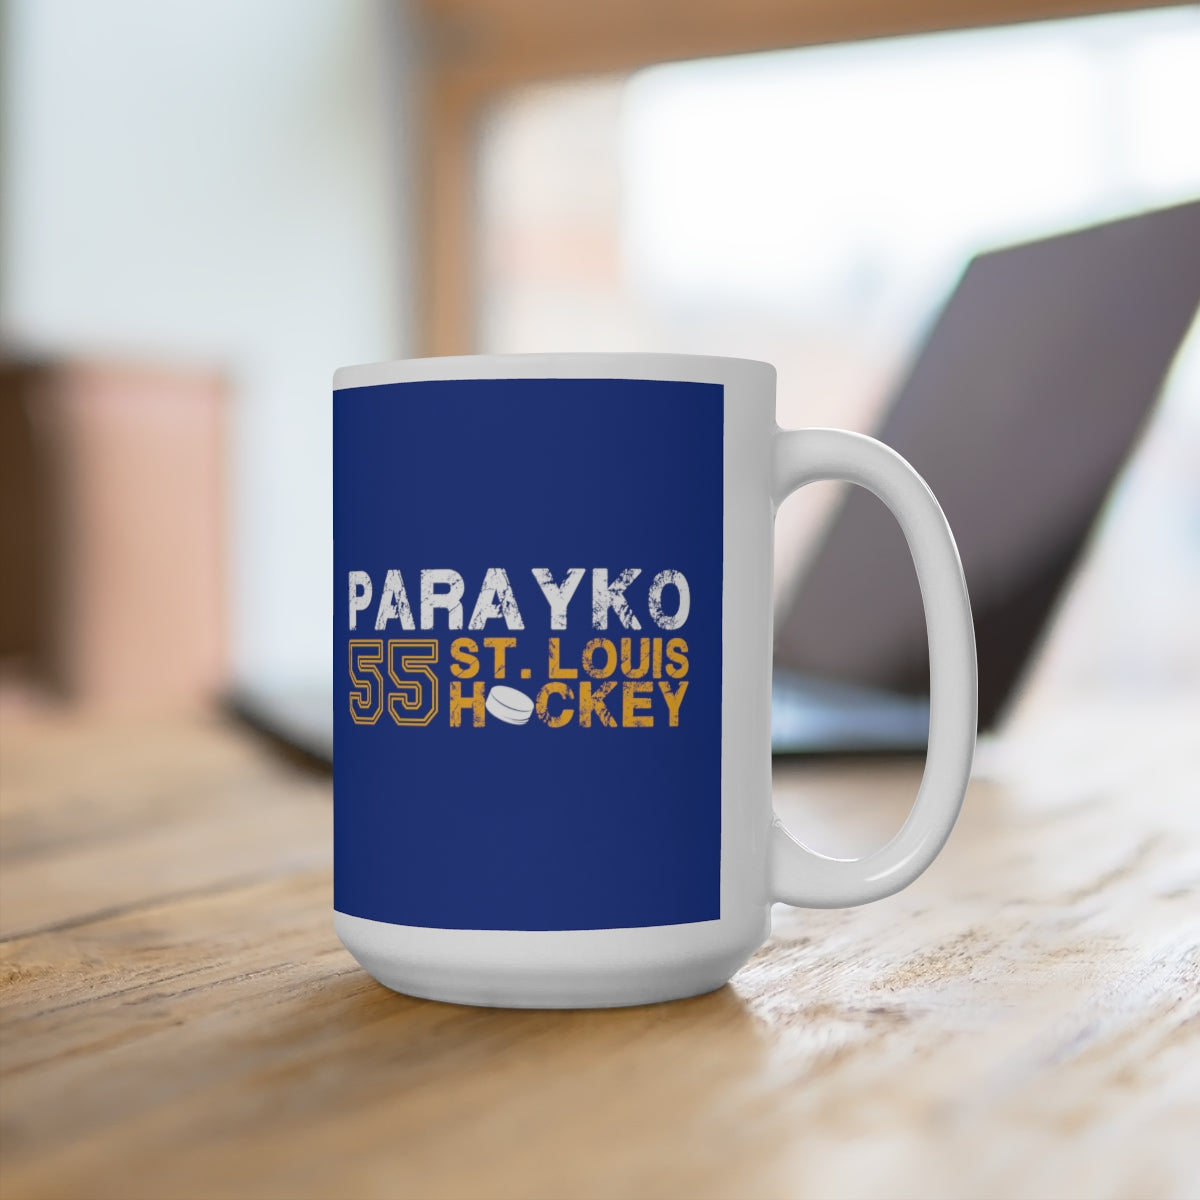 Parayko 55 St. Louis Hockey Ceramic Coffee Mug In Blue, 15oz